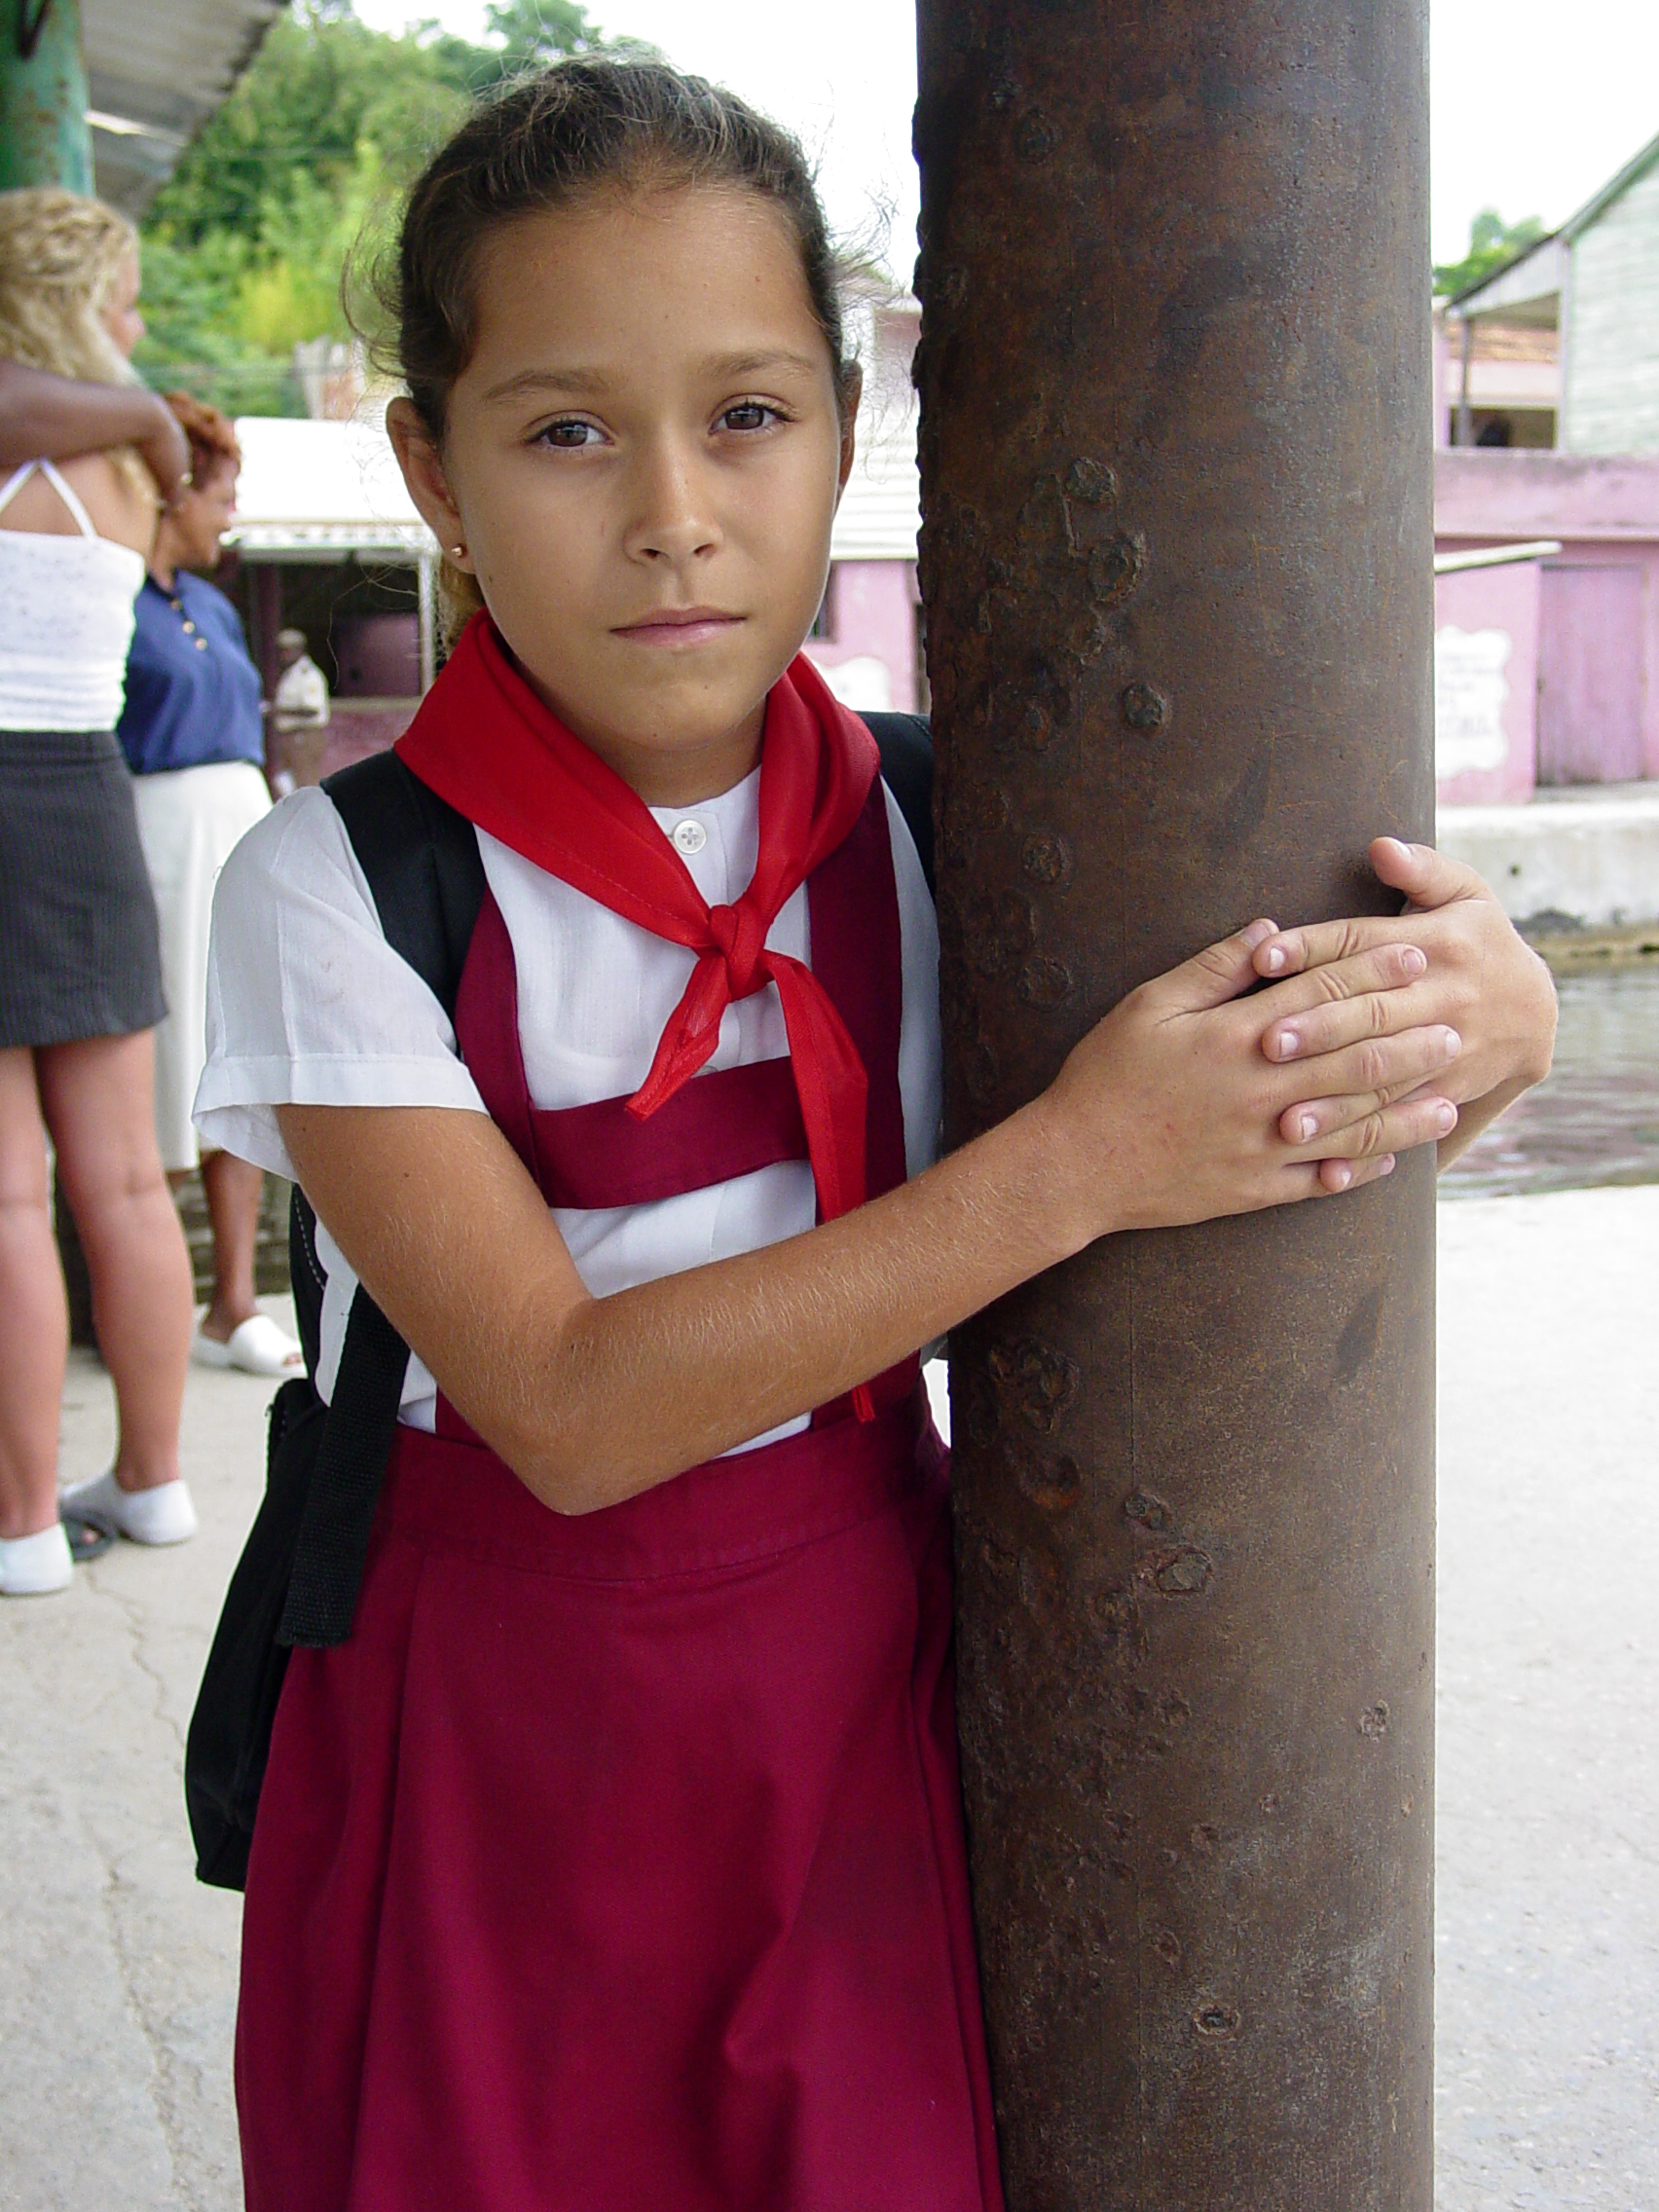 Young_Girl_in_School_Uniform_-_Near_Santiago_de_Cuba_-_Cuba.jpg